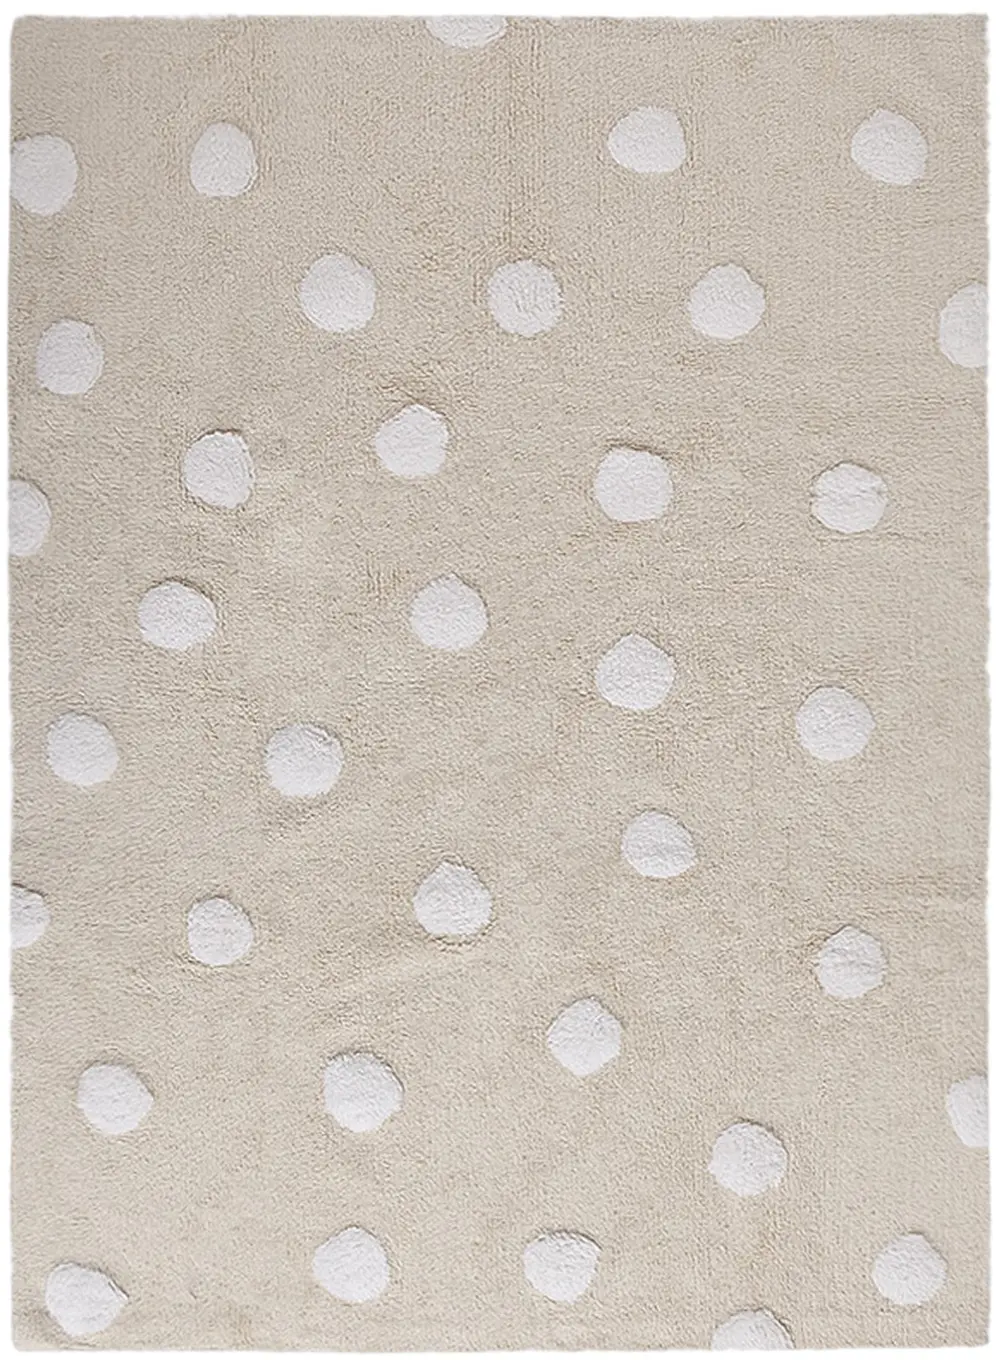 C-00088 4 x 5 Small Polka Dots Beige and White Washable Rug-1